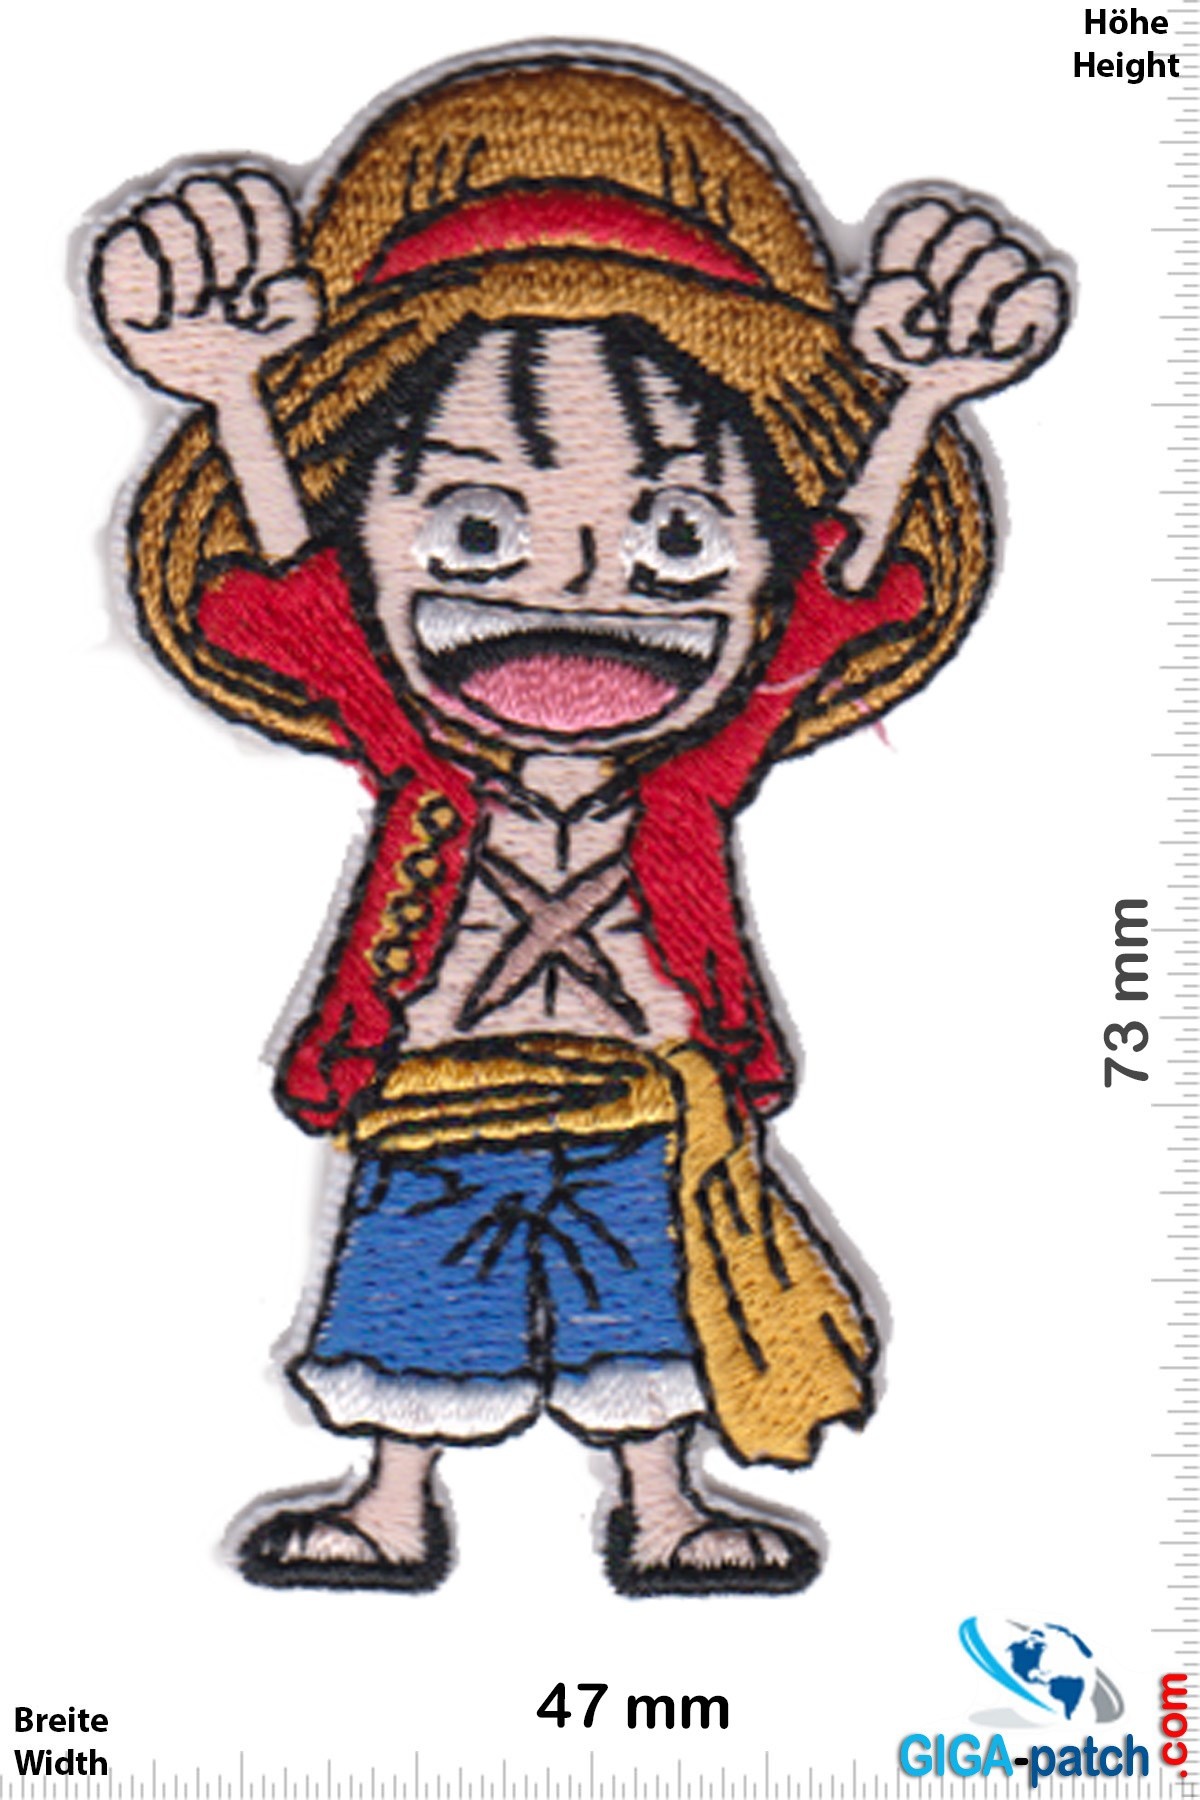 One Piece -Patch - Iron On - Patch Portachiavi Adesivi - giga